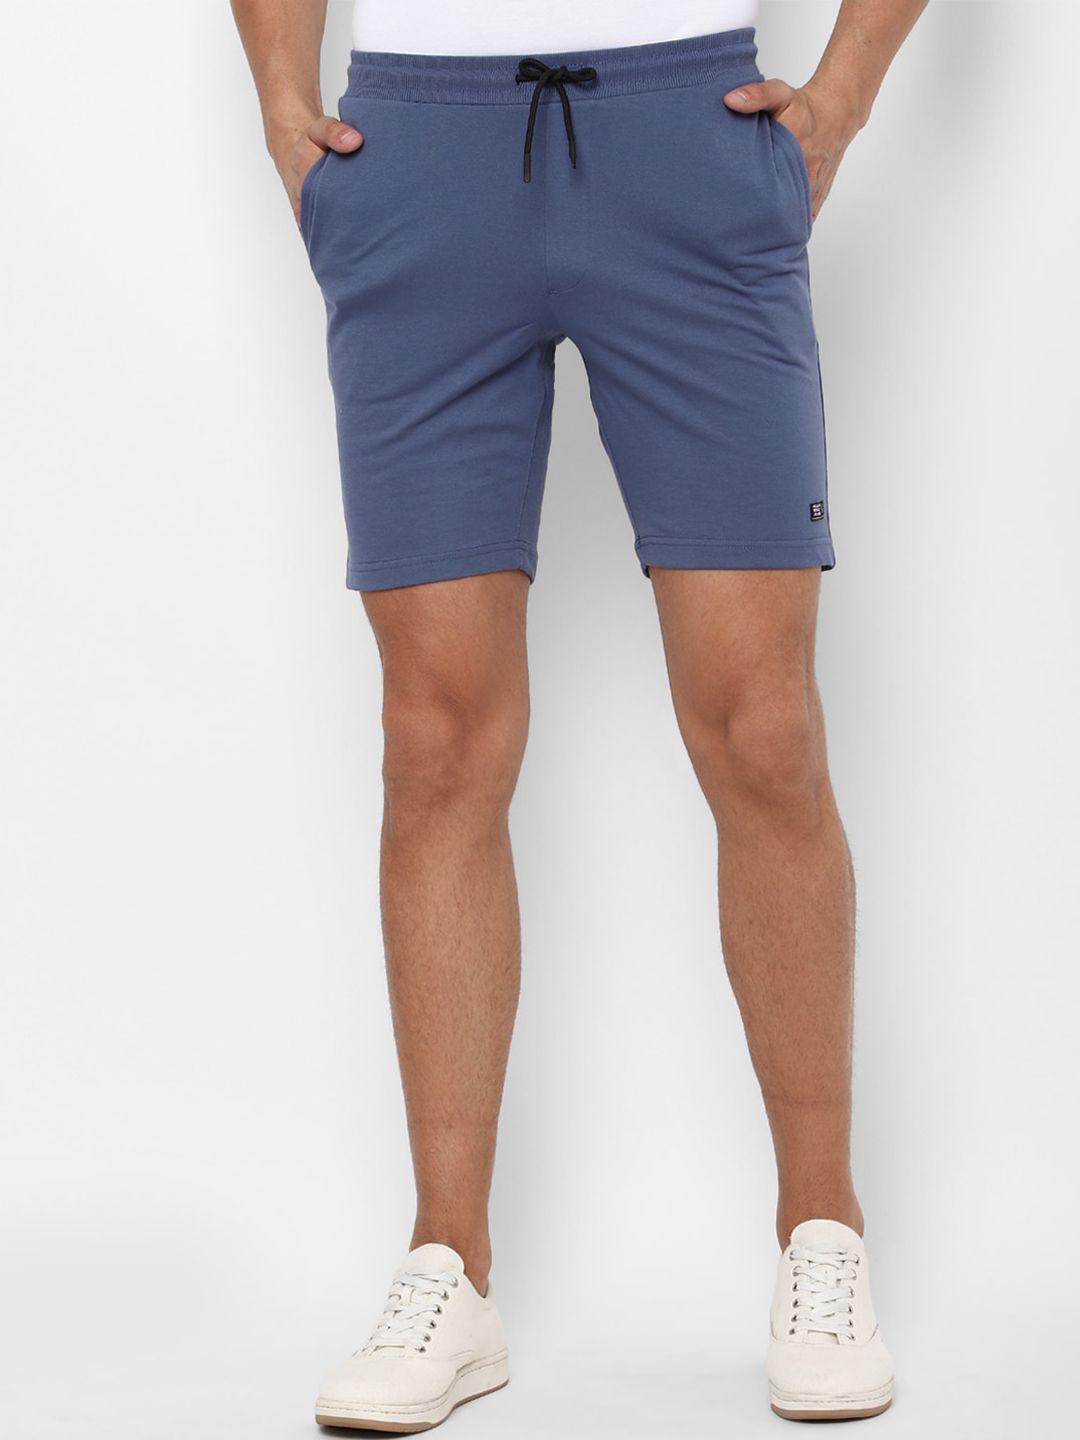 allen solly sport men blue slim fit shorts